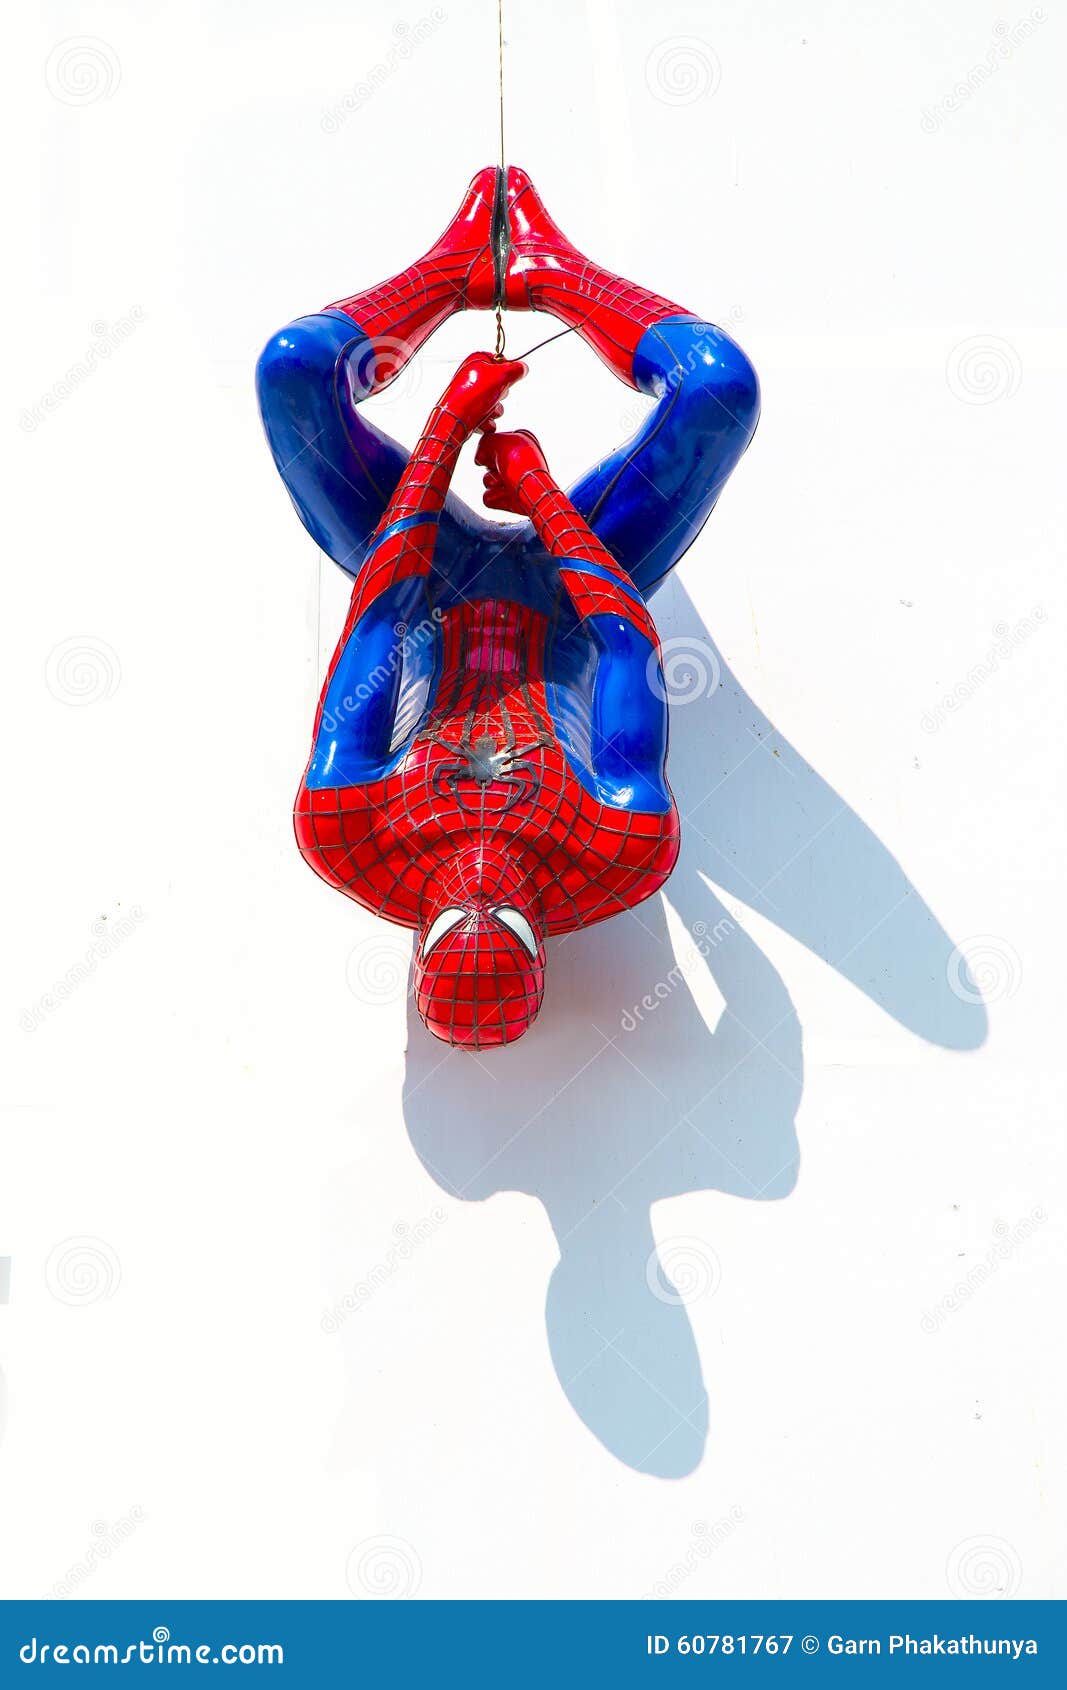 Download Spider-Man Upside Down Marvel iPhone XR Wallpaper | Wallpapers.com